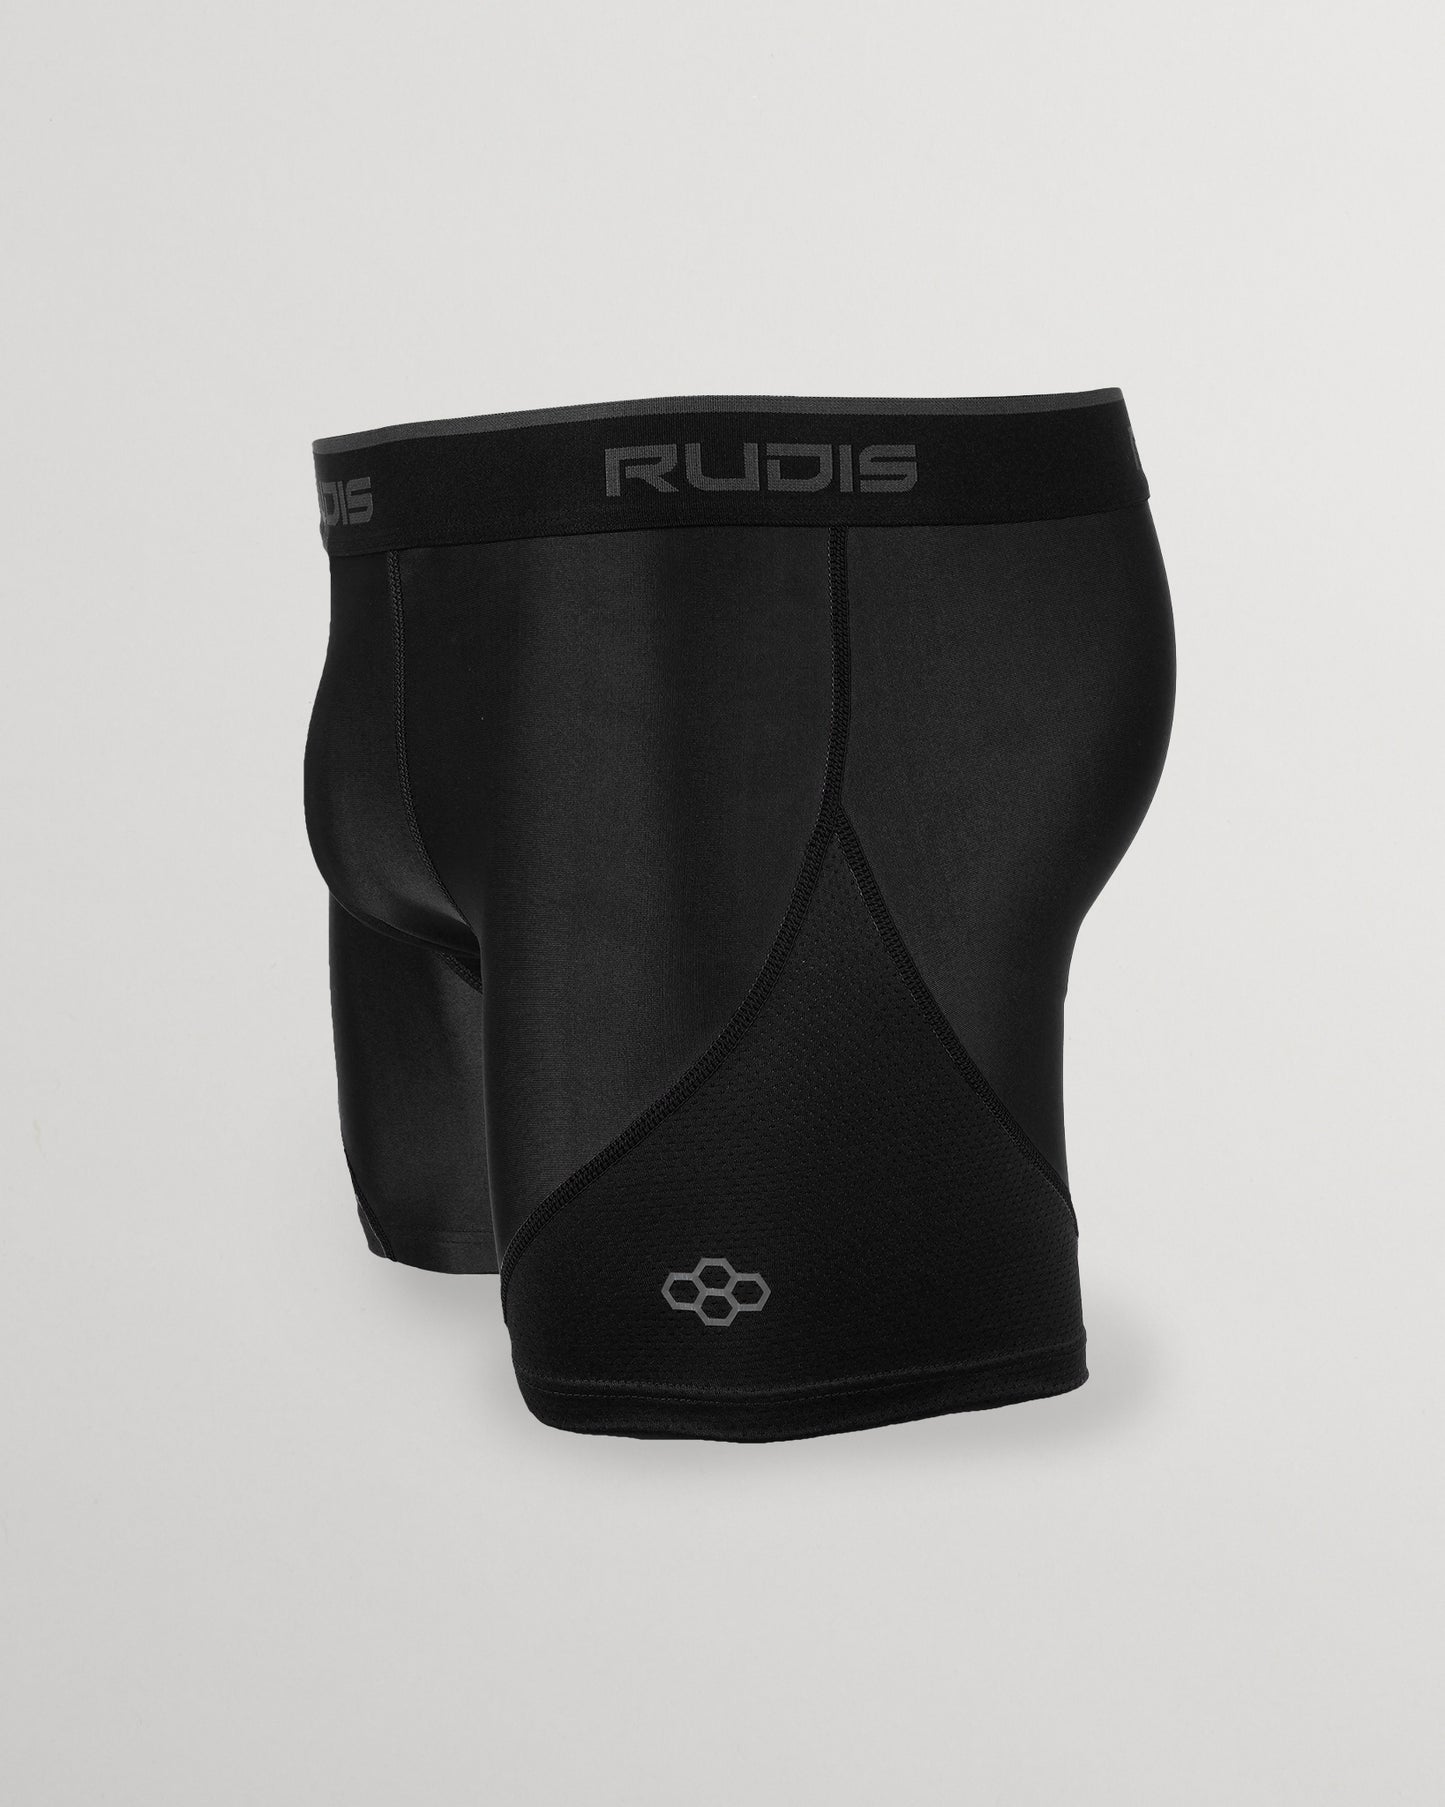 RUDIS Essential Black/Black Youth Boxer Brief